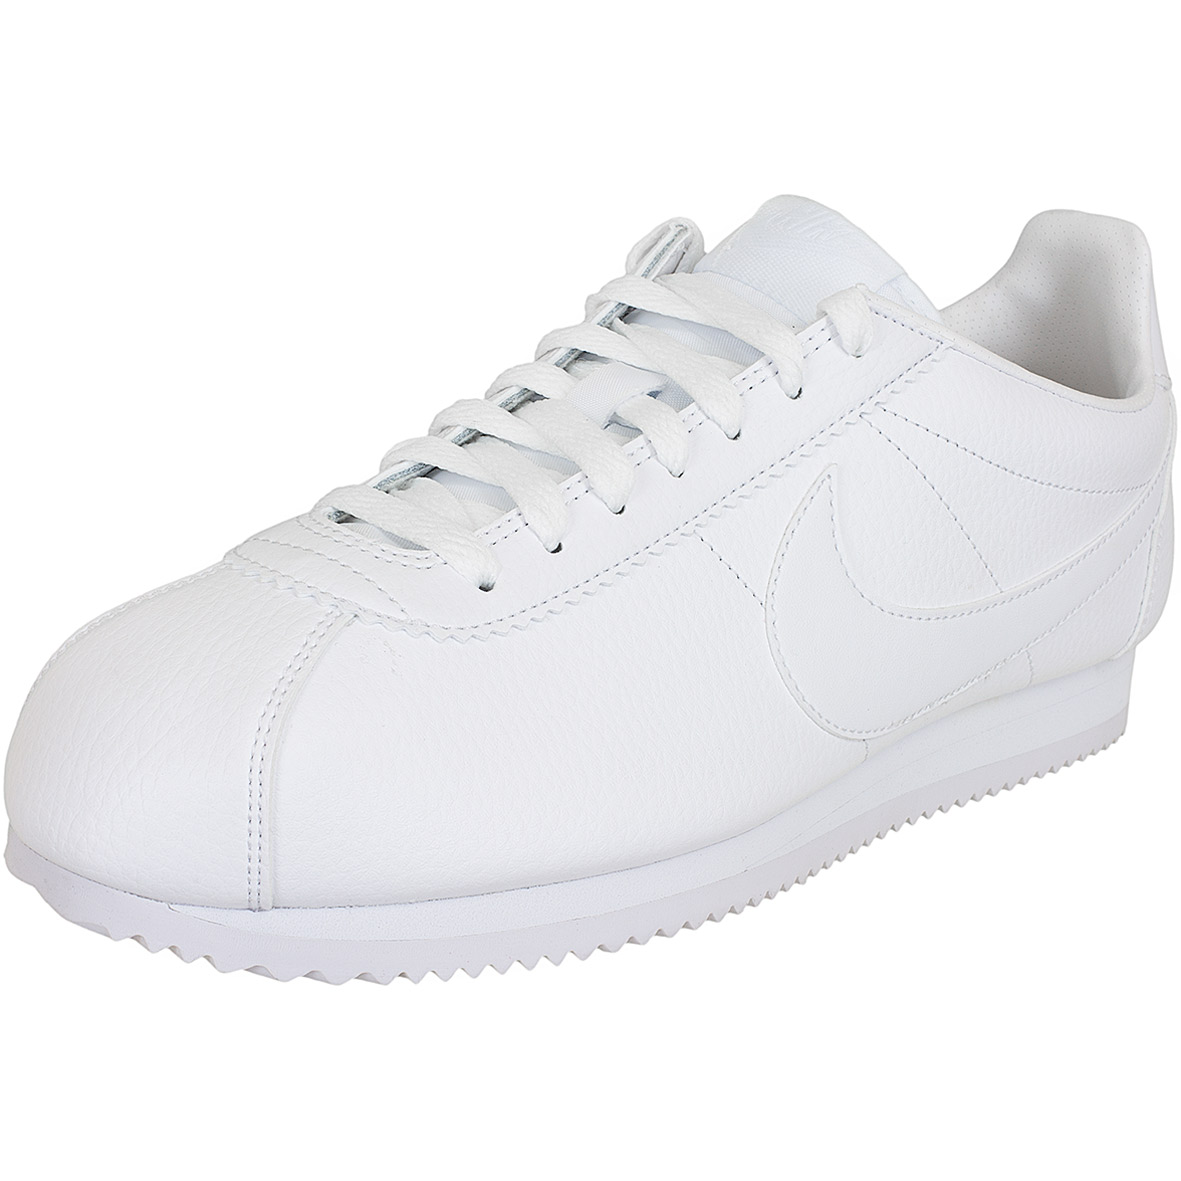 ☆ Nike Sneaker Classic Cortez Leather weiß/weiß - hier bestellen!